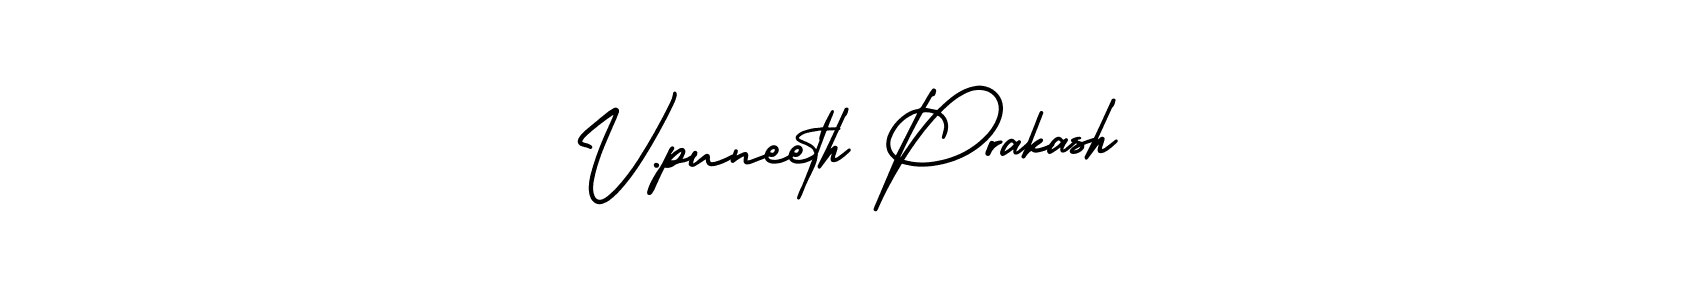 How to Draw V.puneeth Prakash signature style? AmerikaSignatureDemo-Regular is a latest design signature styles for name V.puneeth Prakash. V.puneeth Prakash signature style 3 images and pictures png